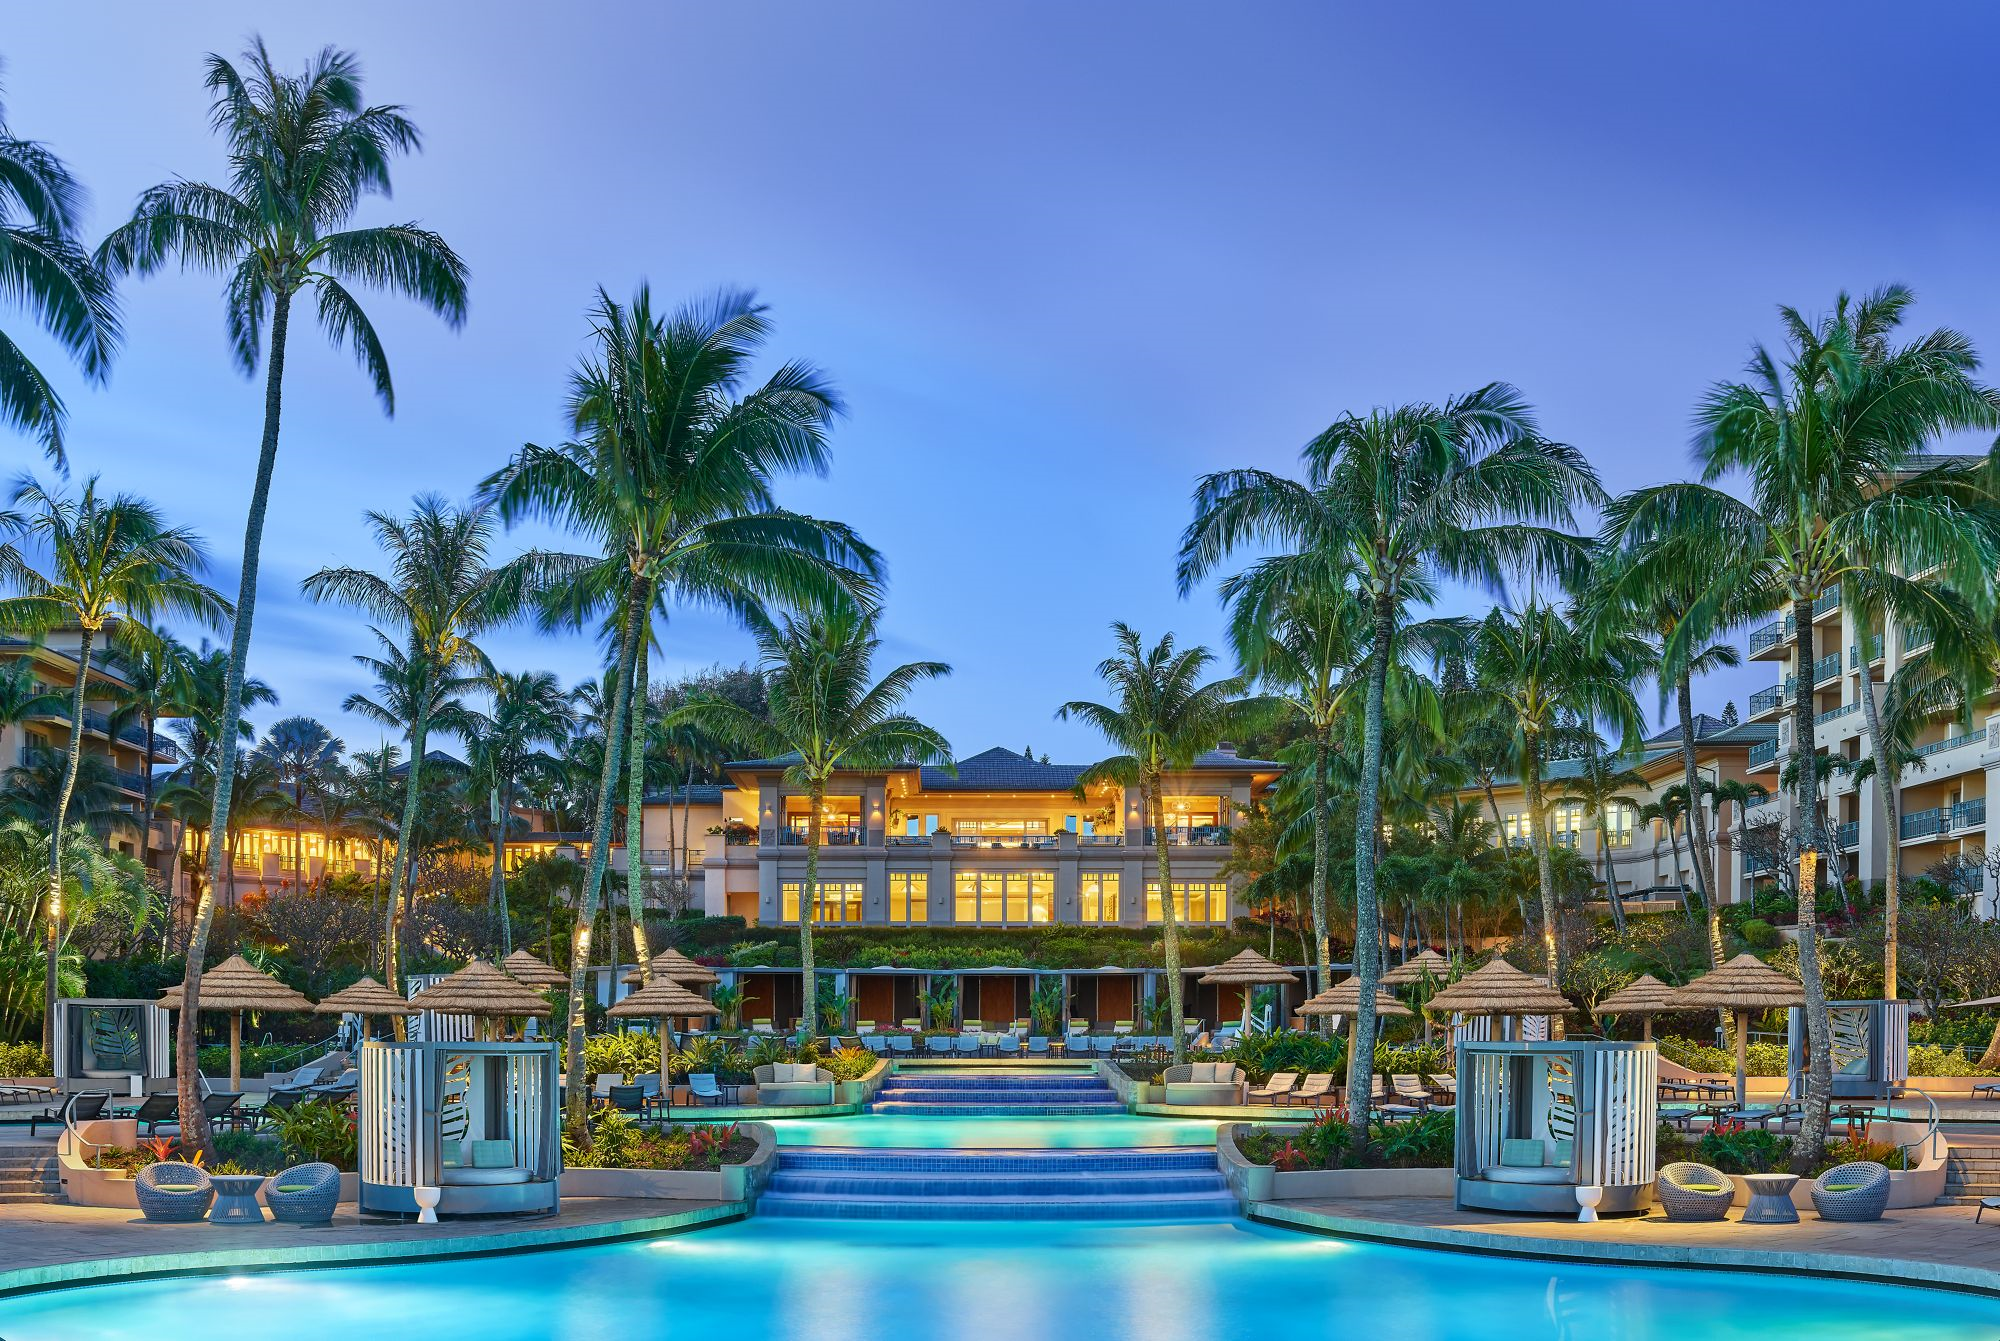 The Ritz Carlton Maui Kapalua pool